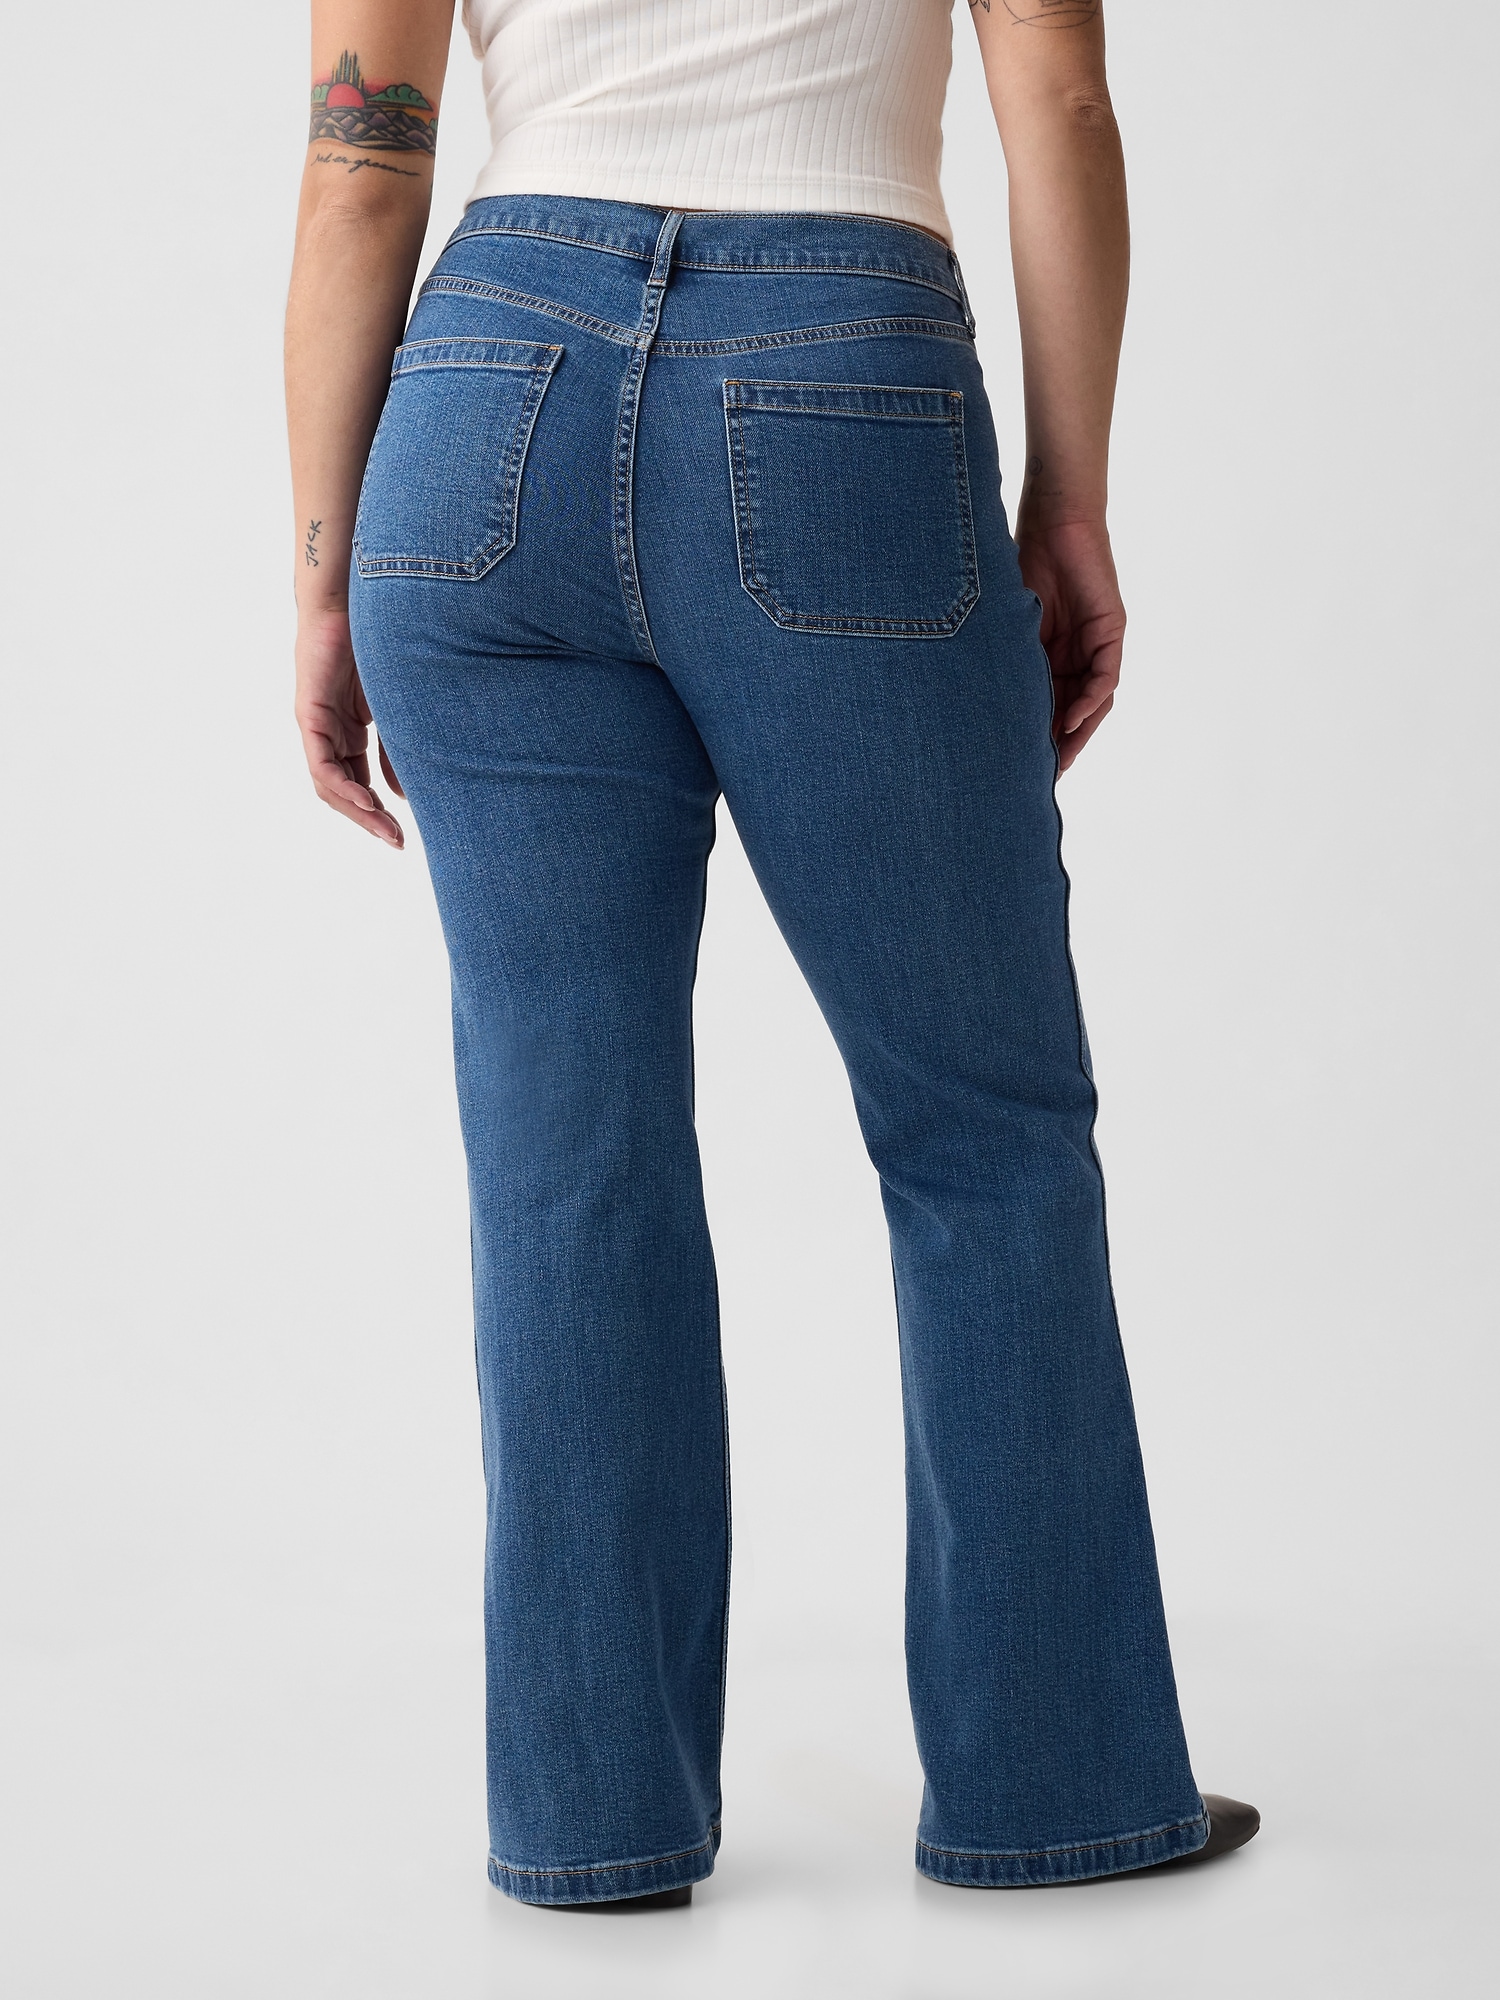 Retro Pocket Flare Jeans in 90's Indigo